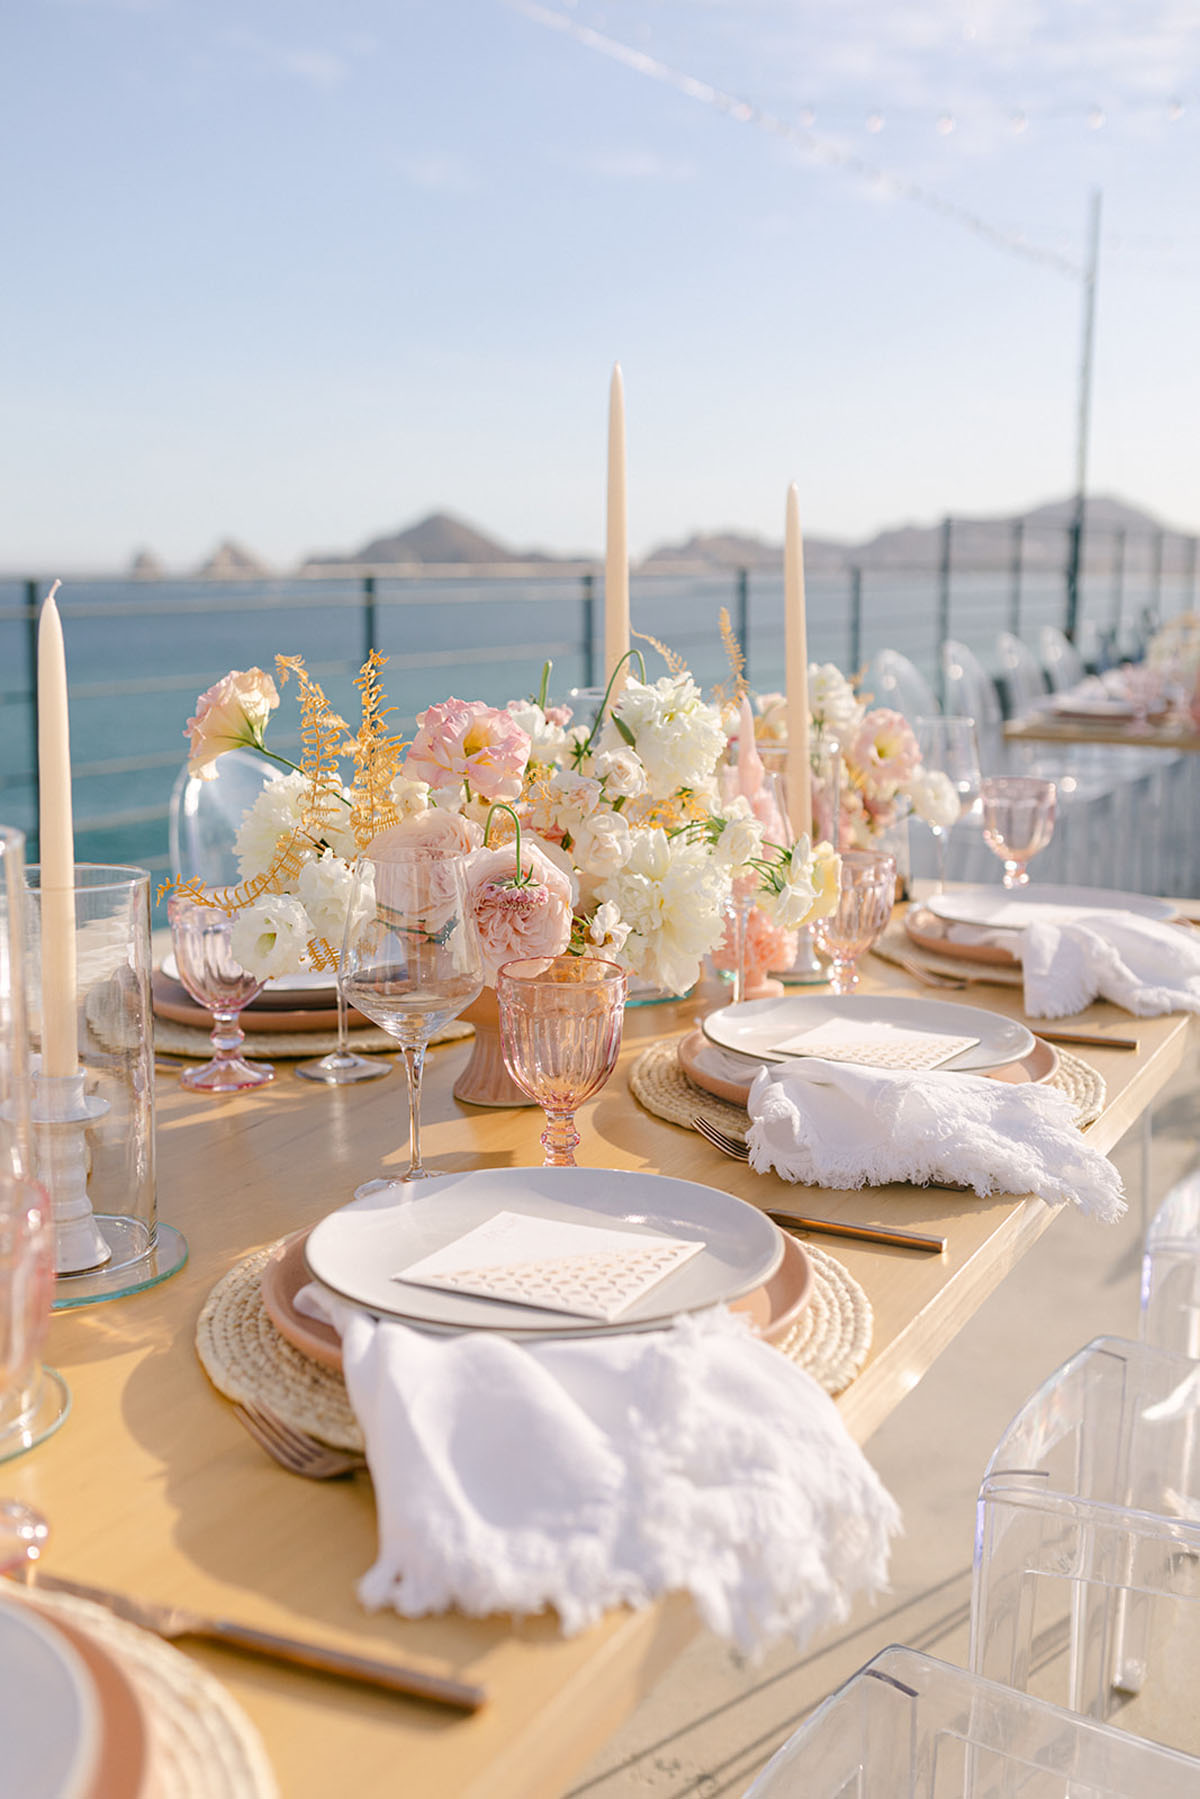 Cape Hotel beach wedding in Mexico